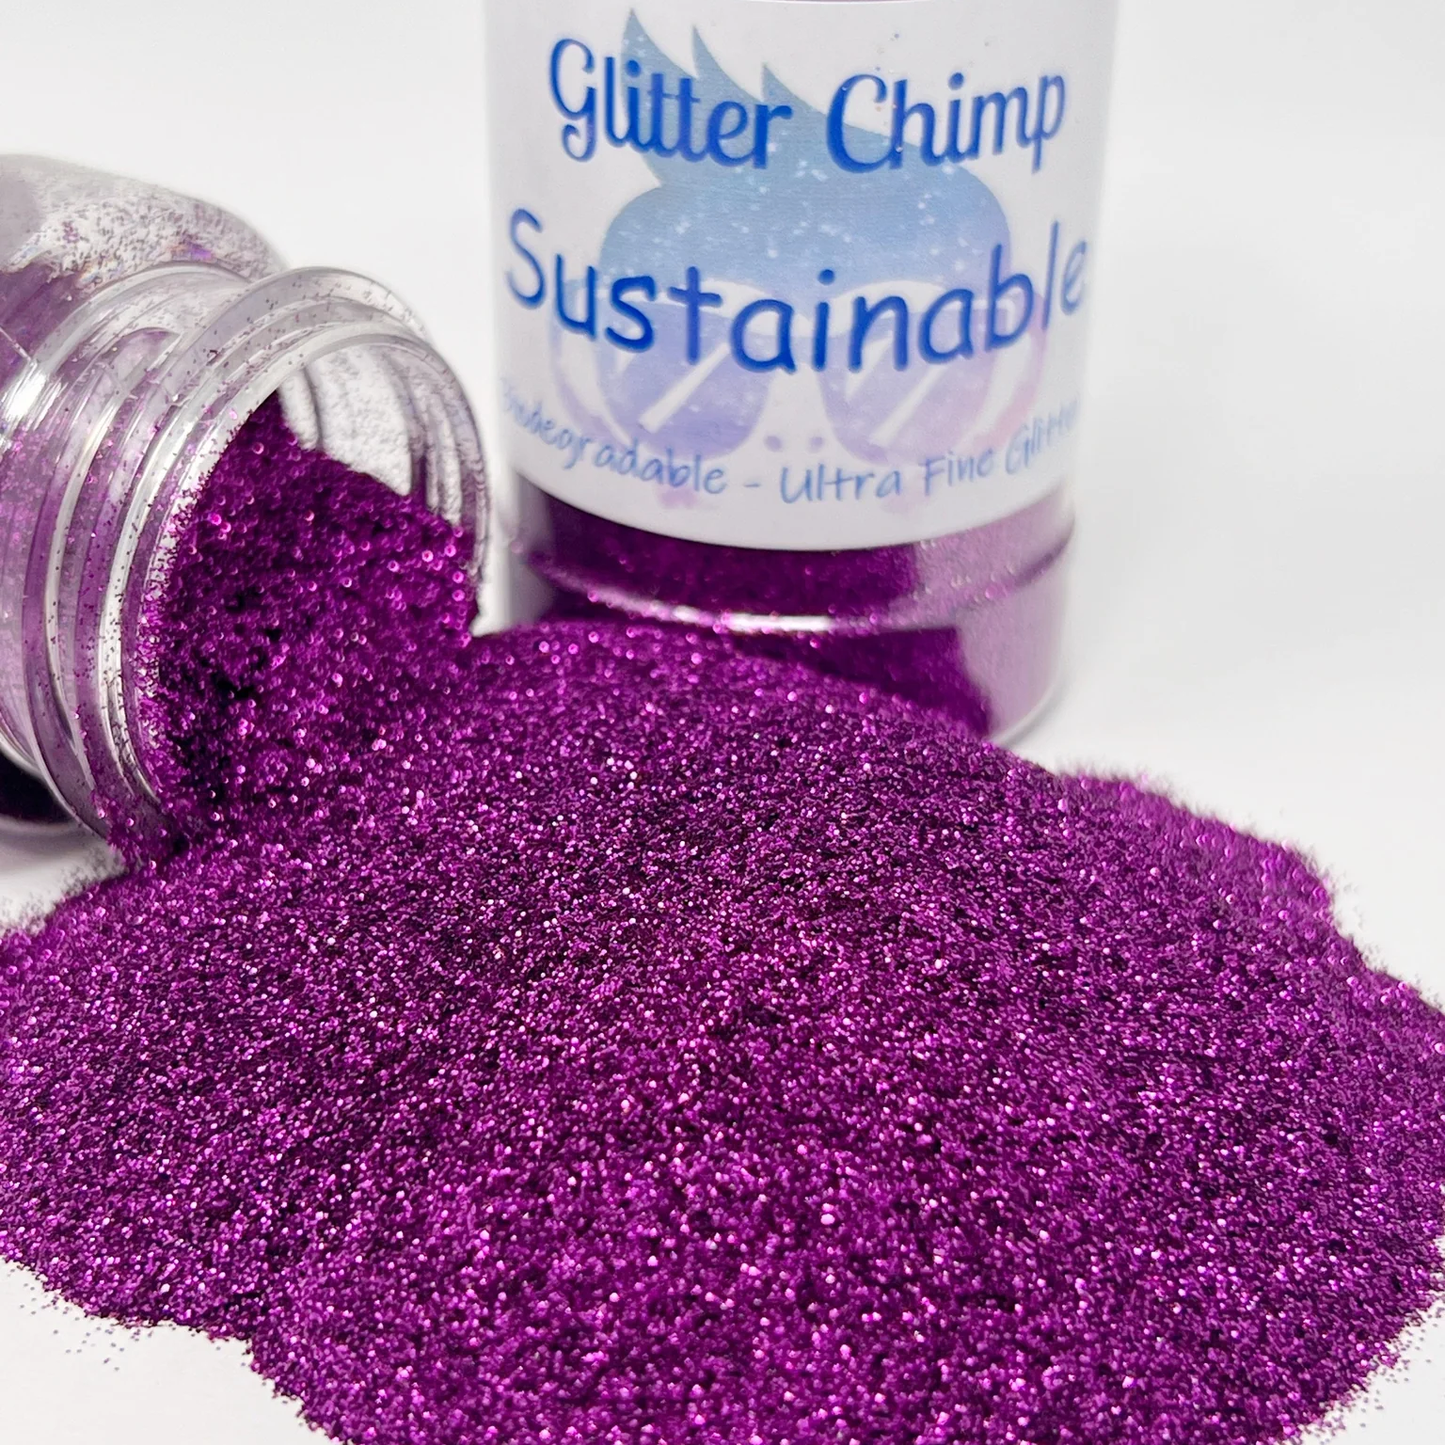 Glitter Chimp Sustainable - Biodegradable Ultra Fine Glitter